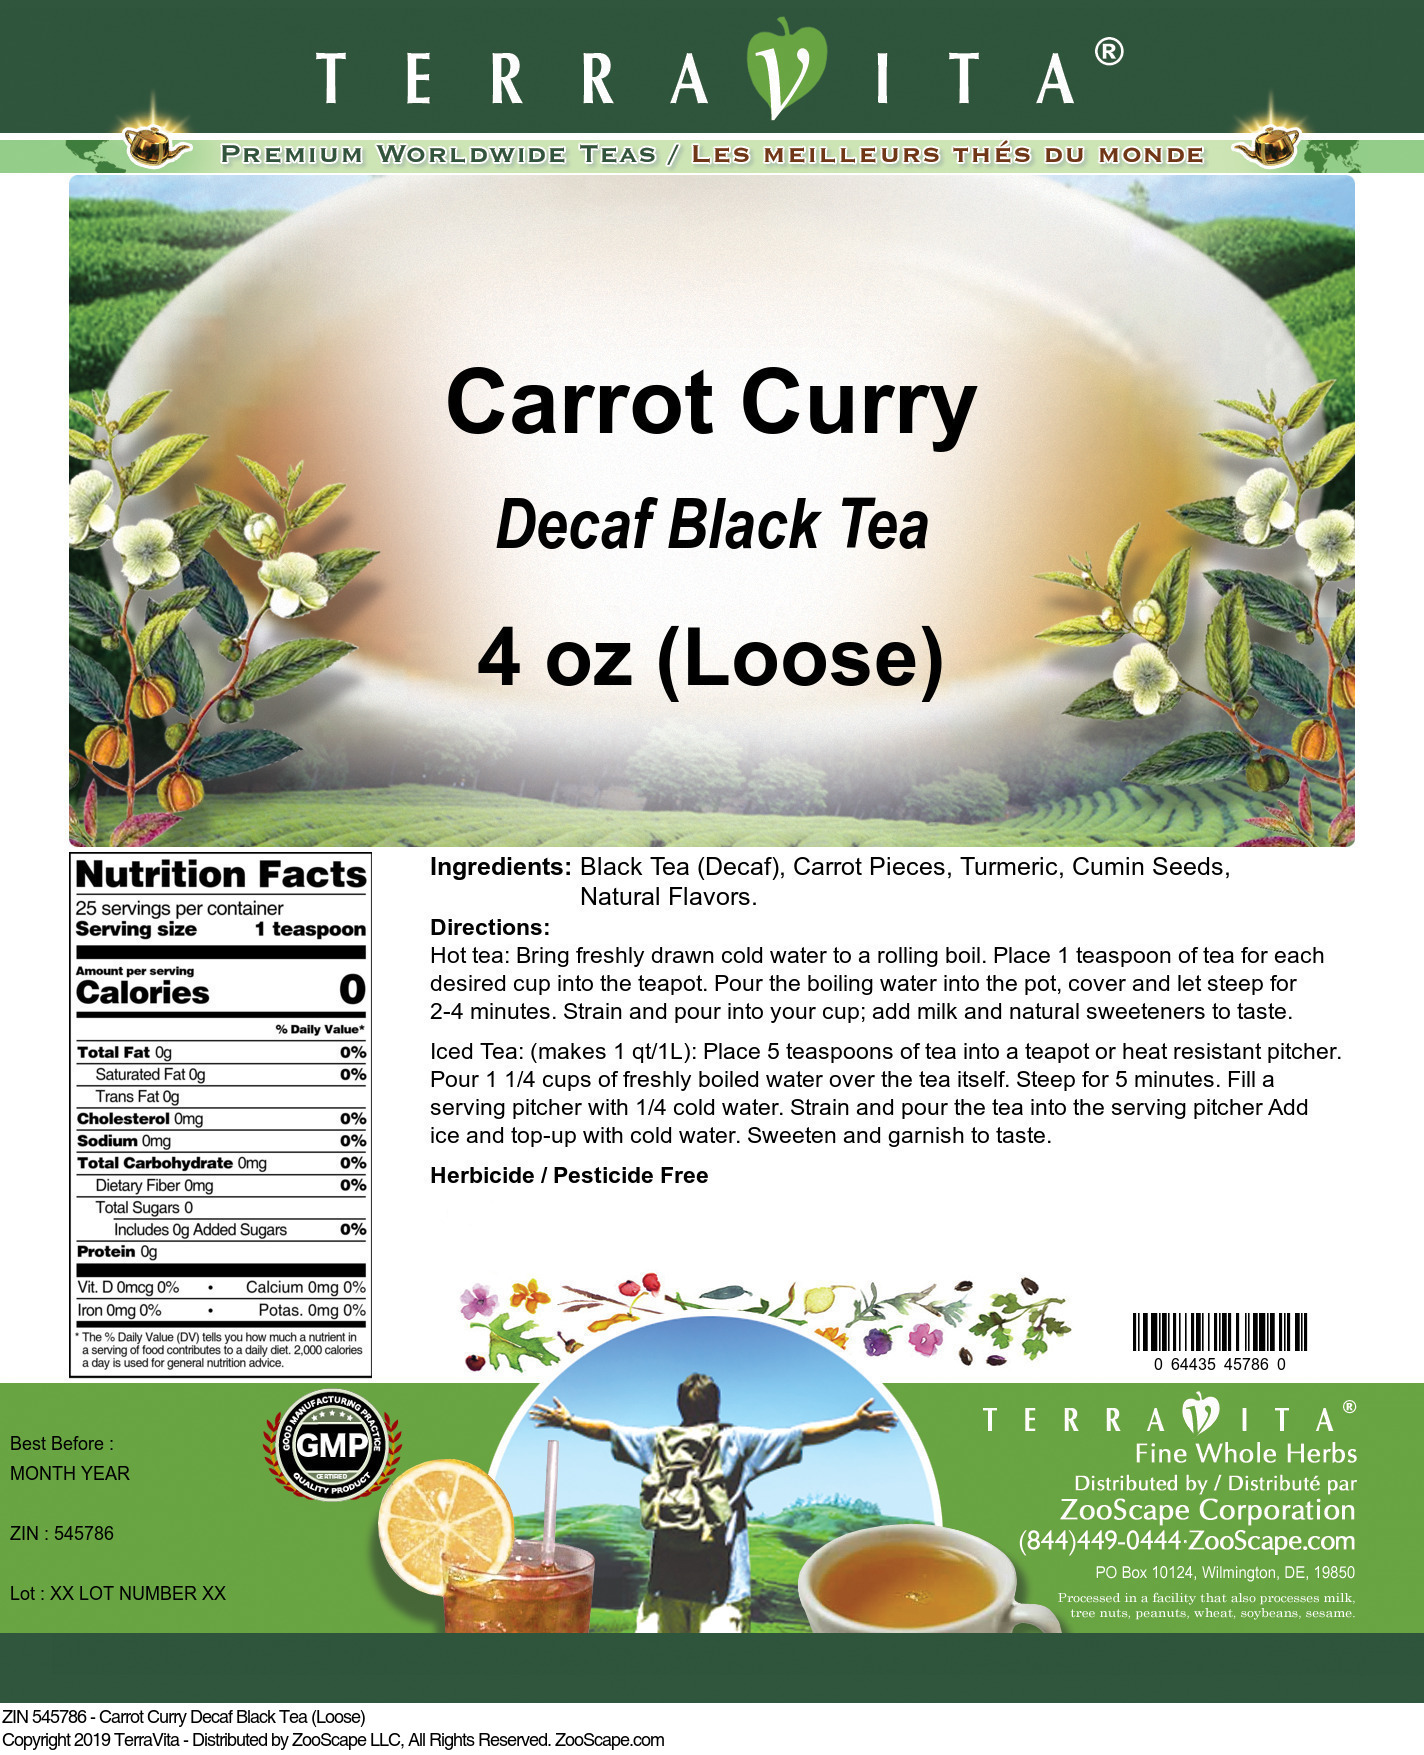 Carrot Curry Decaf Black Tea (Loose) - Label